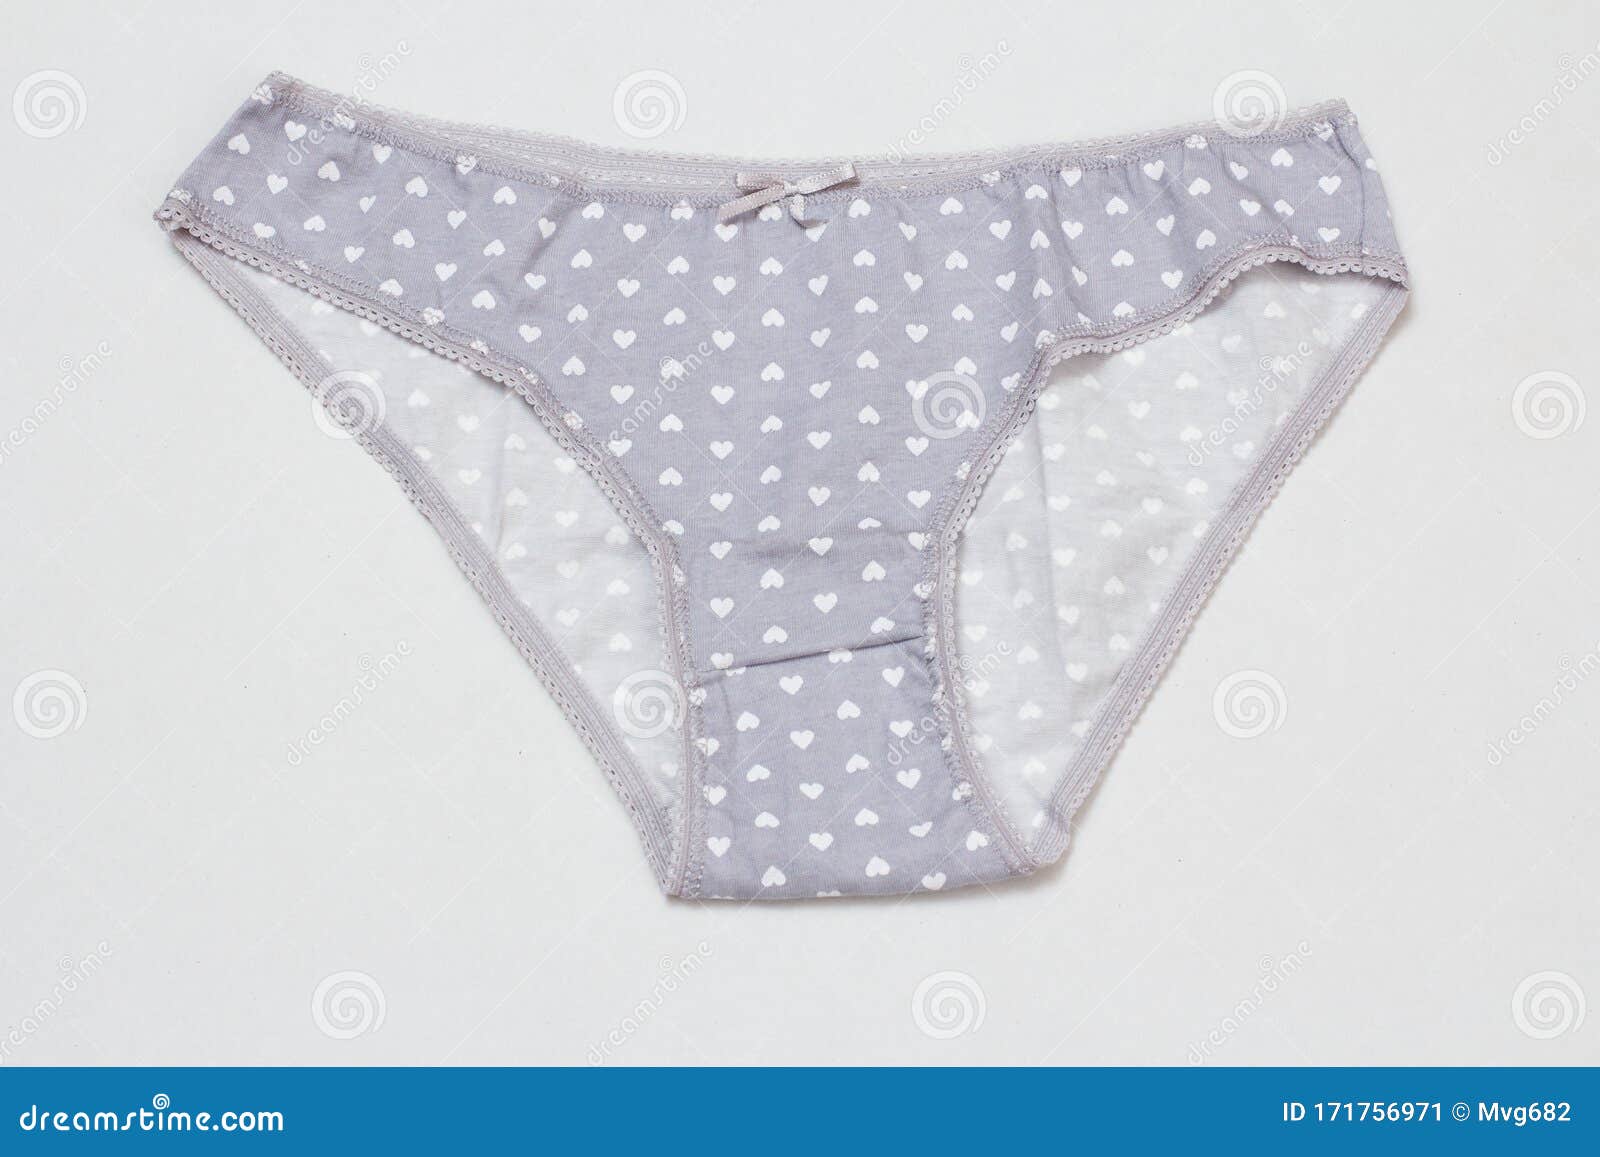 Beautiful Women`s Cotton Panties on White Background Stock Image ...